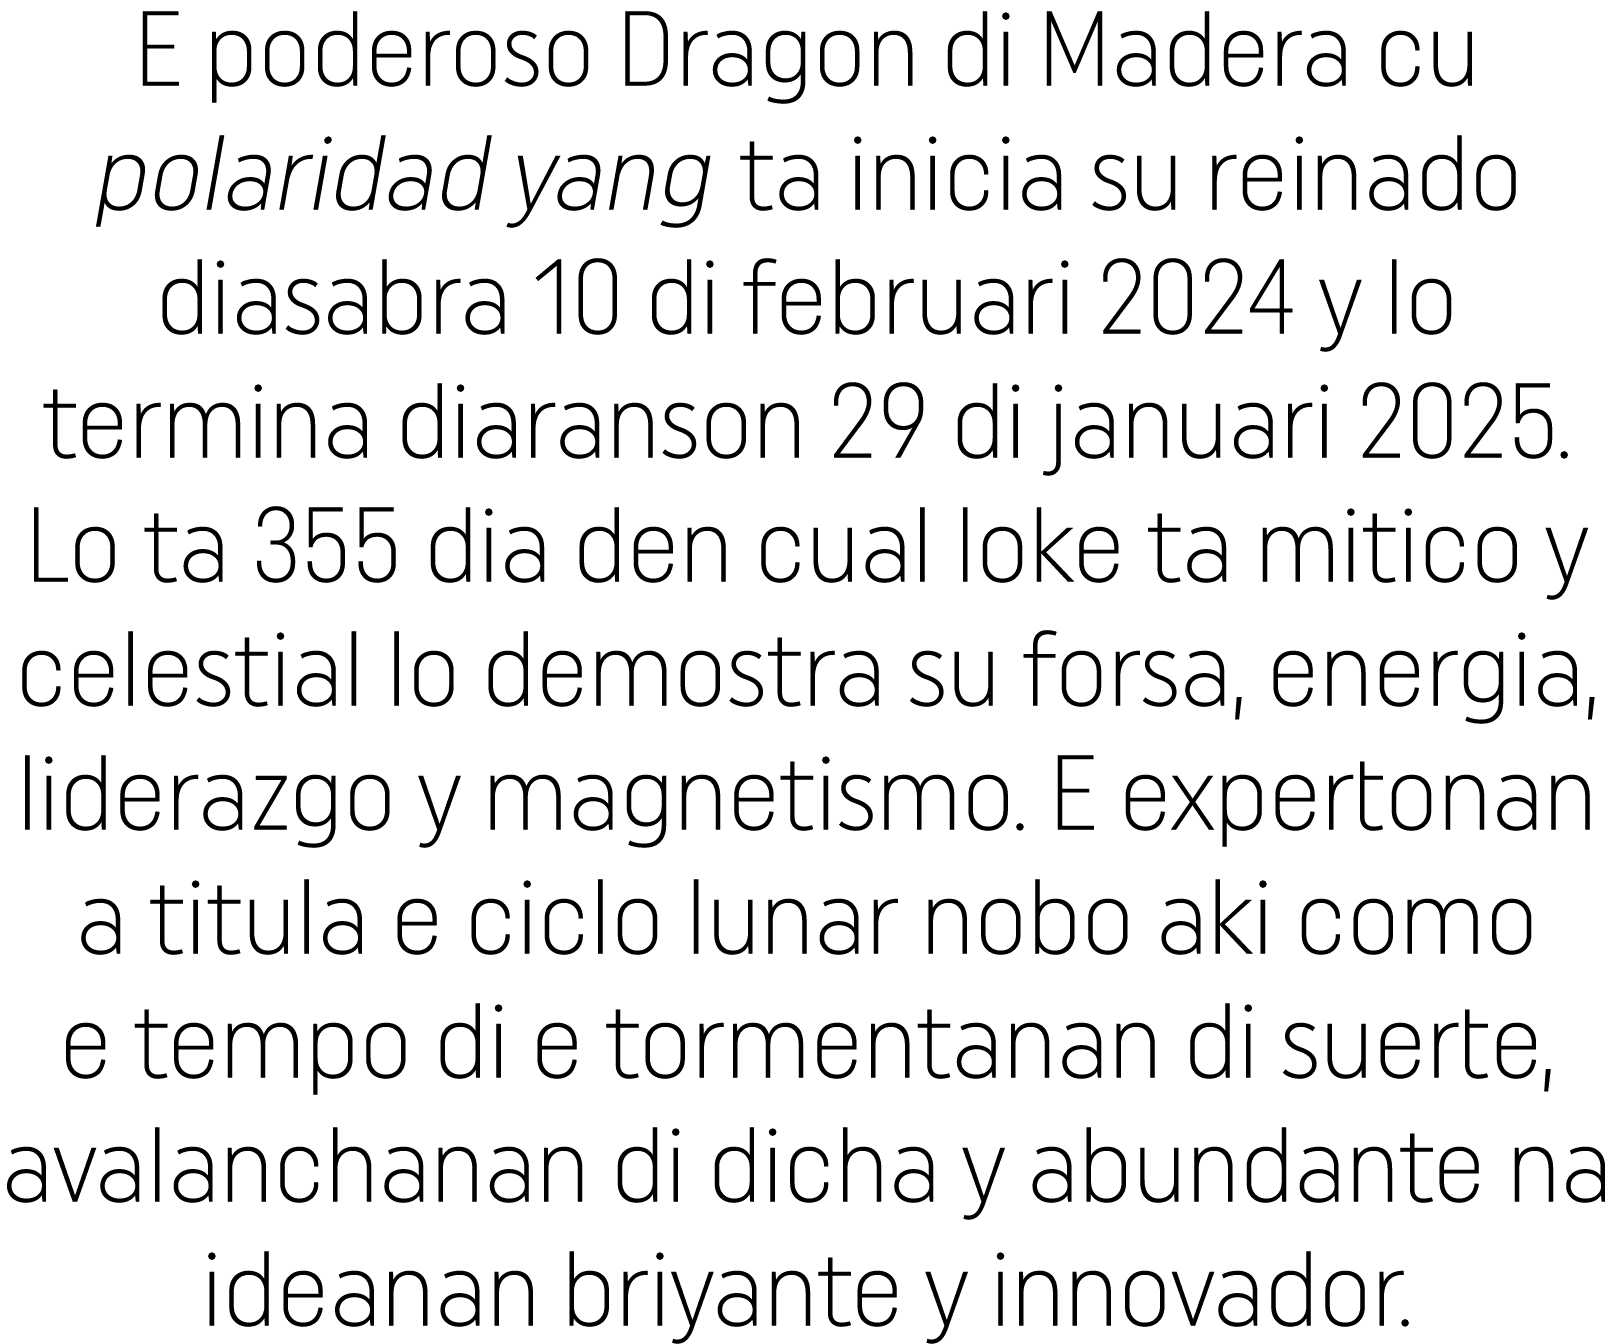 E poderoso Dragon di Madera cu polaridad yang ta inicia su reinado diasabra 10 di februari 2024 y lo termina diaranso...